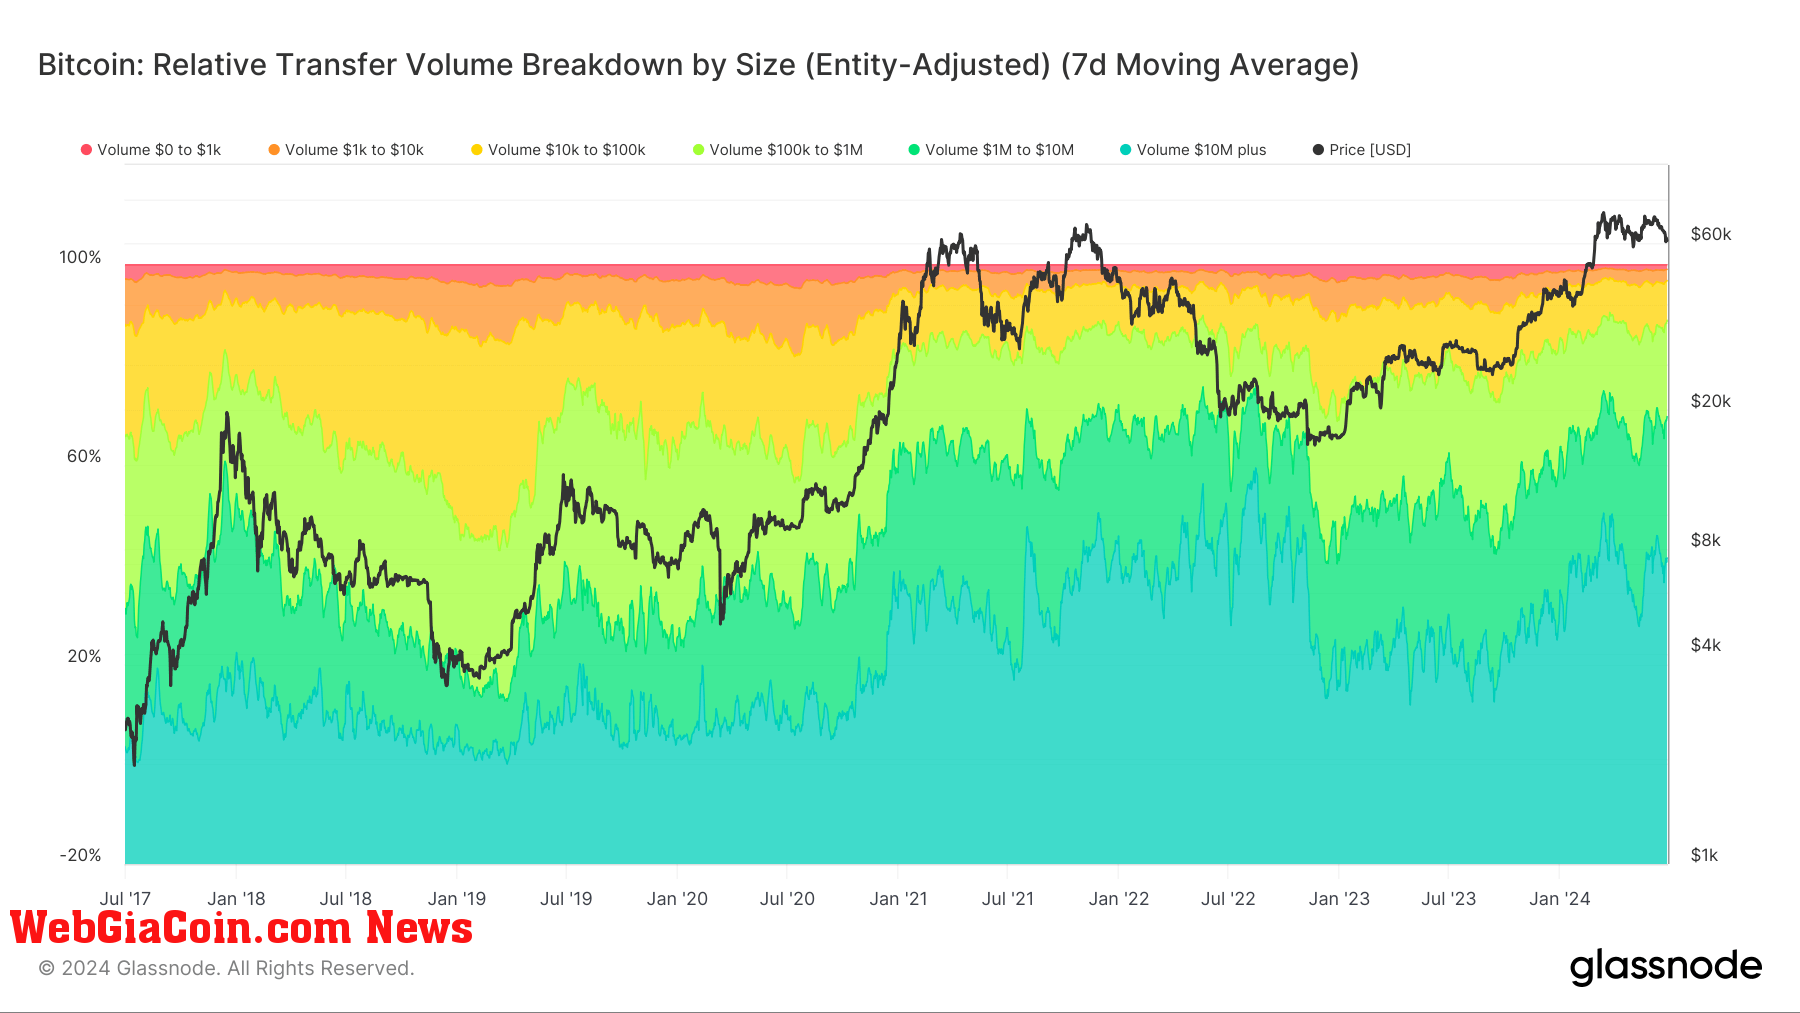 Transfer Volume Breakdown by Size: (Source: Glassnode)